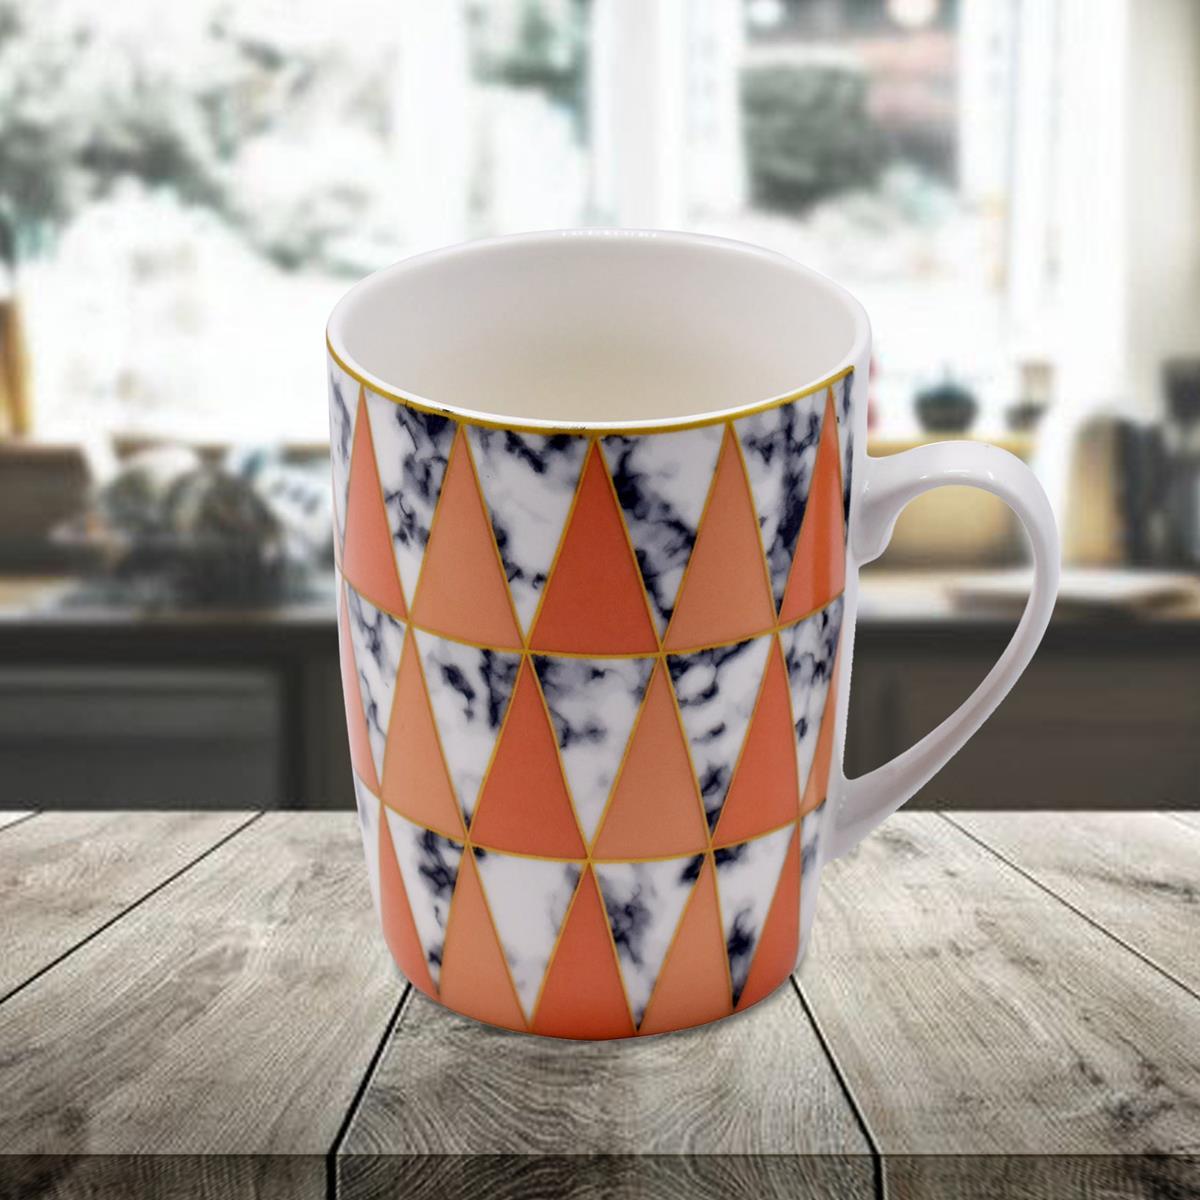 Printed Ceramic Tall Coffee or Tea Mug with handle - 325ml (R4760-B)